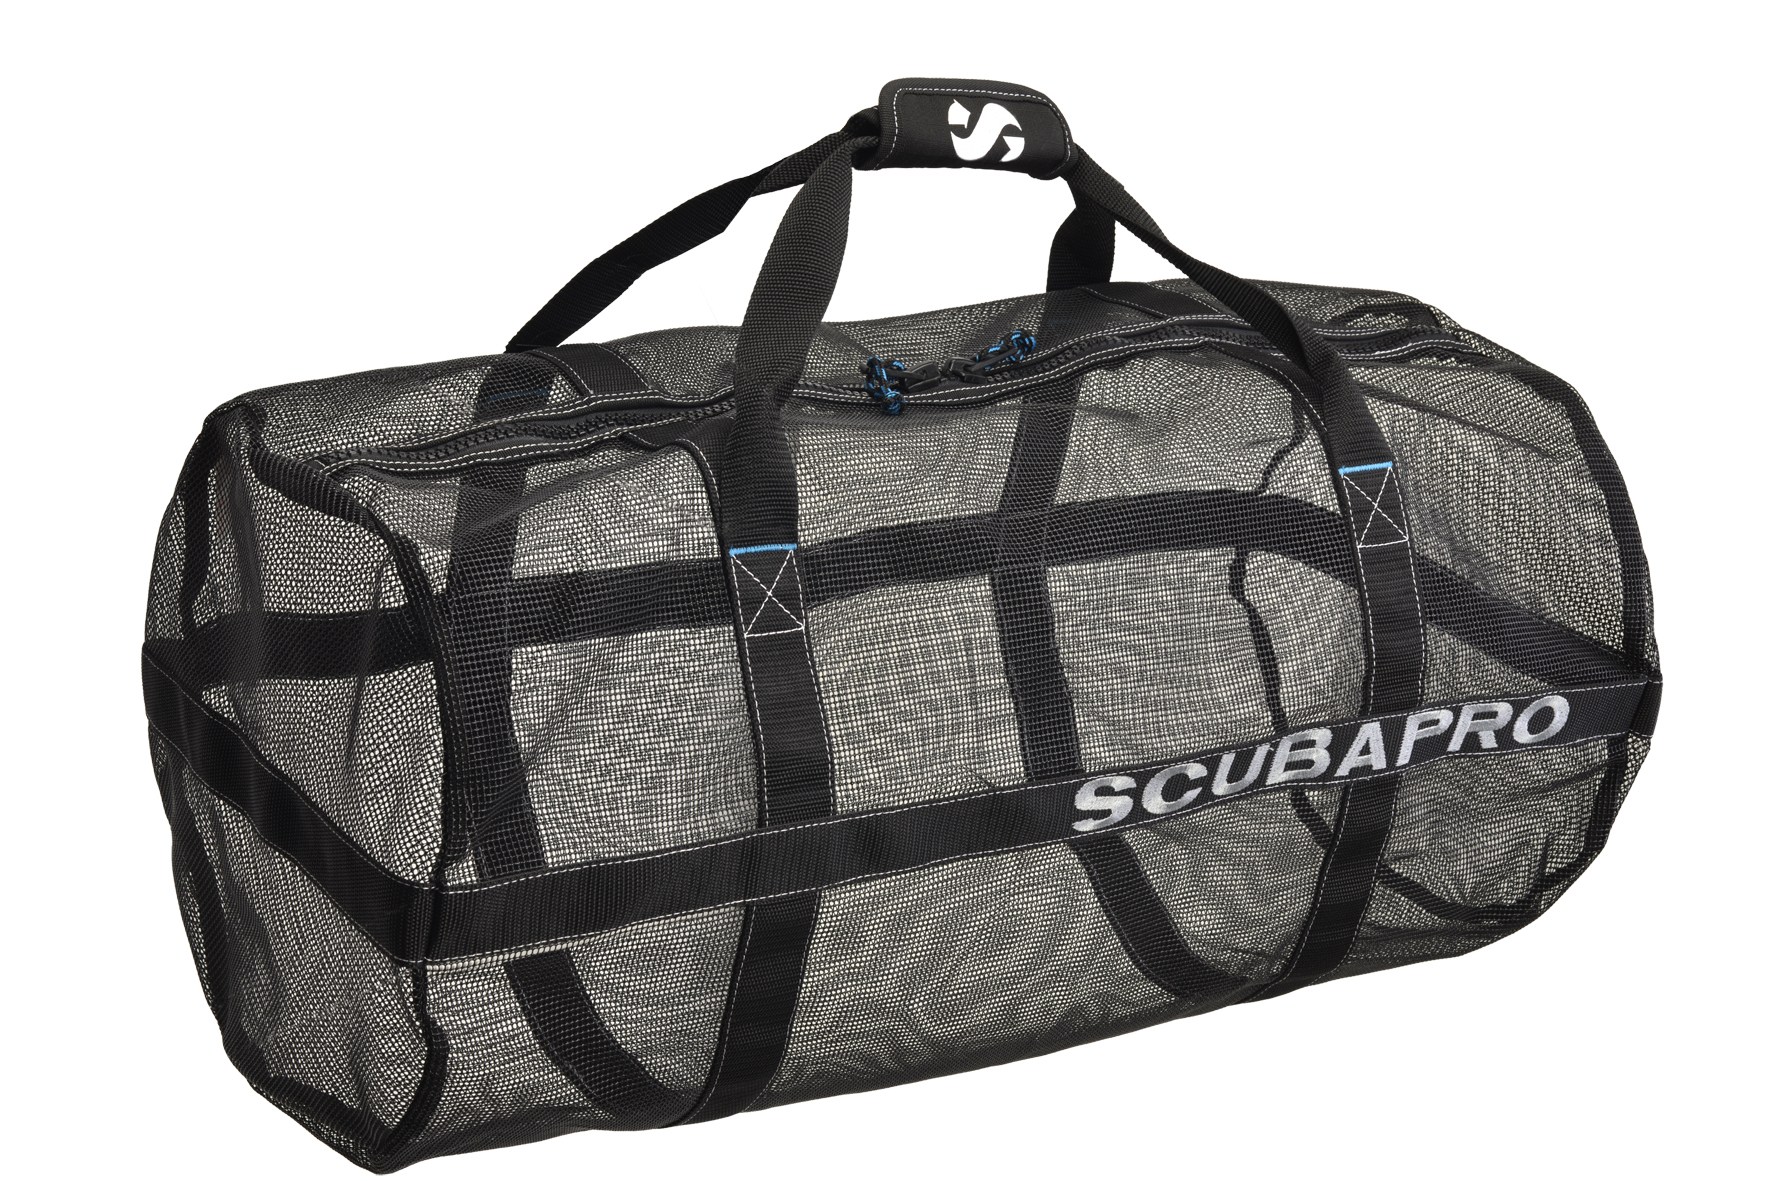 Scubapro Gear Bag Hot Sale, 57% OFF | espirituviajero.com